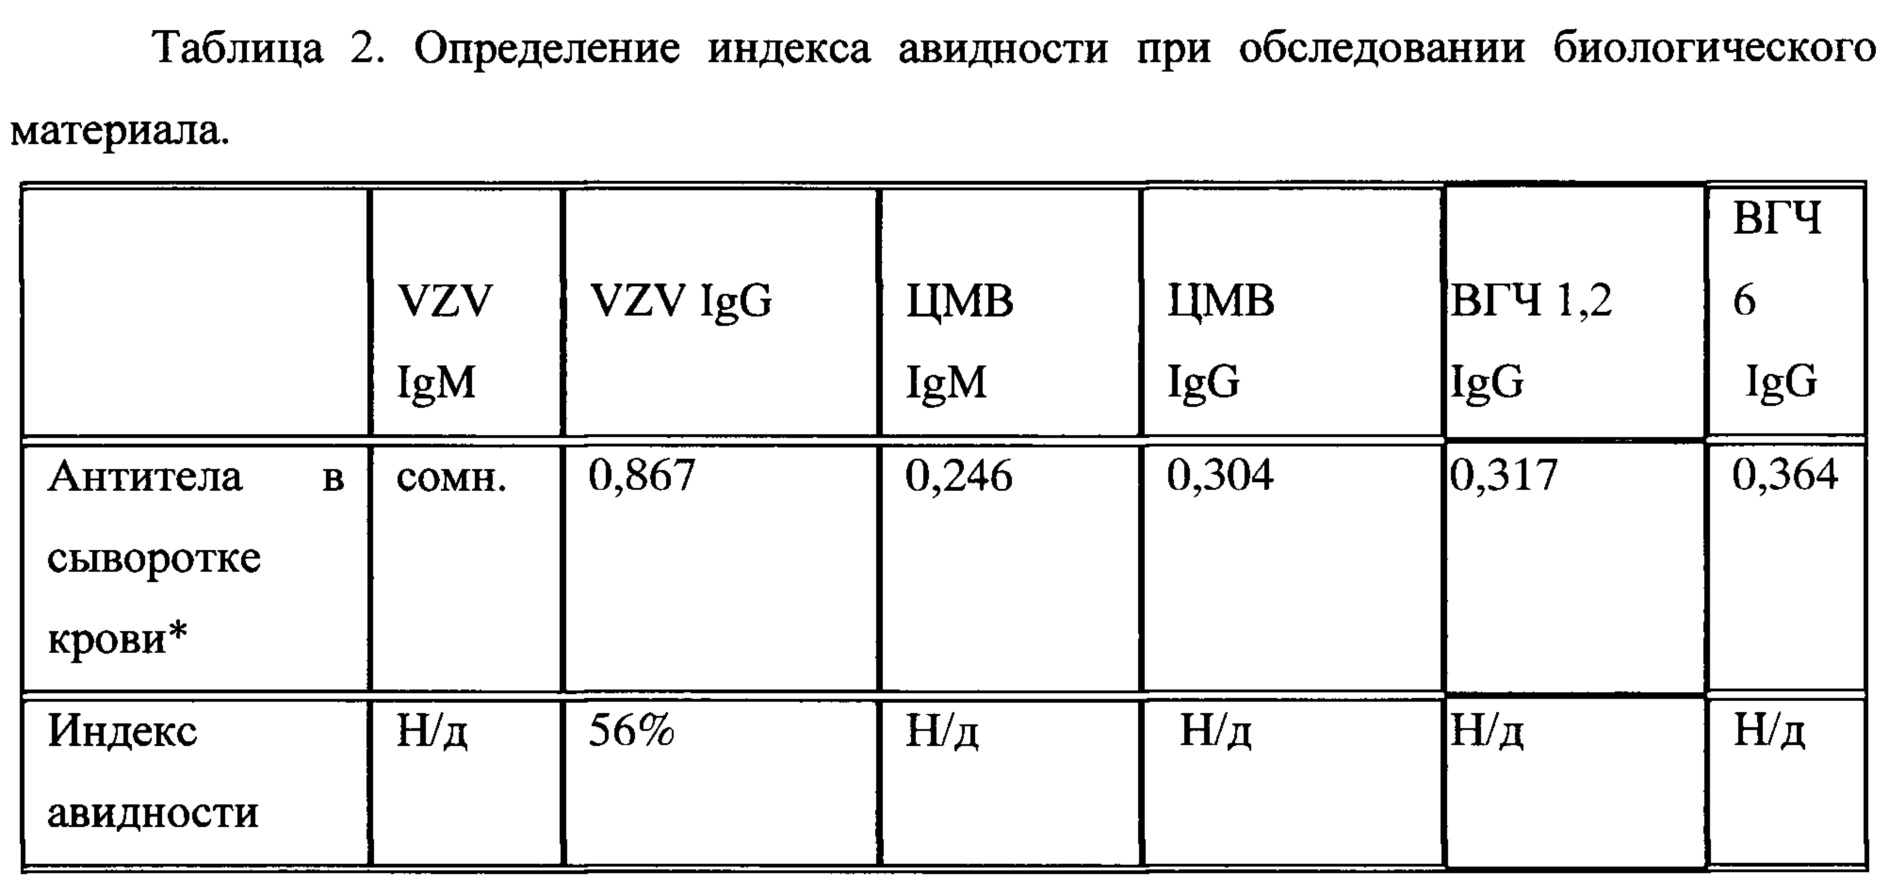 Цитомегаловирус иммуноглобулин g. Индекс авидности IGG. Индекс авидности антител. Авидность антител к ЦМВ. Индекс авидности ЦМВ.